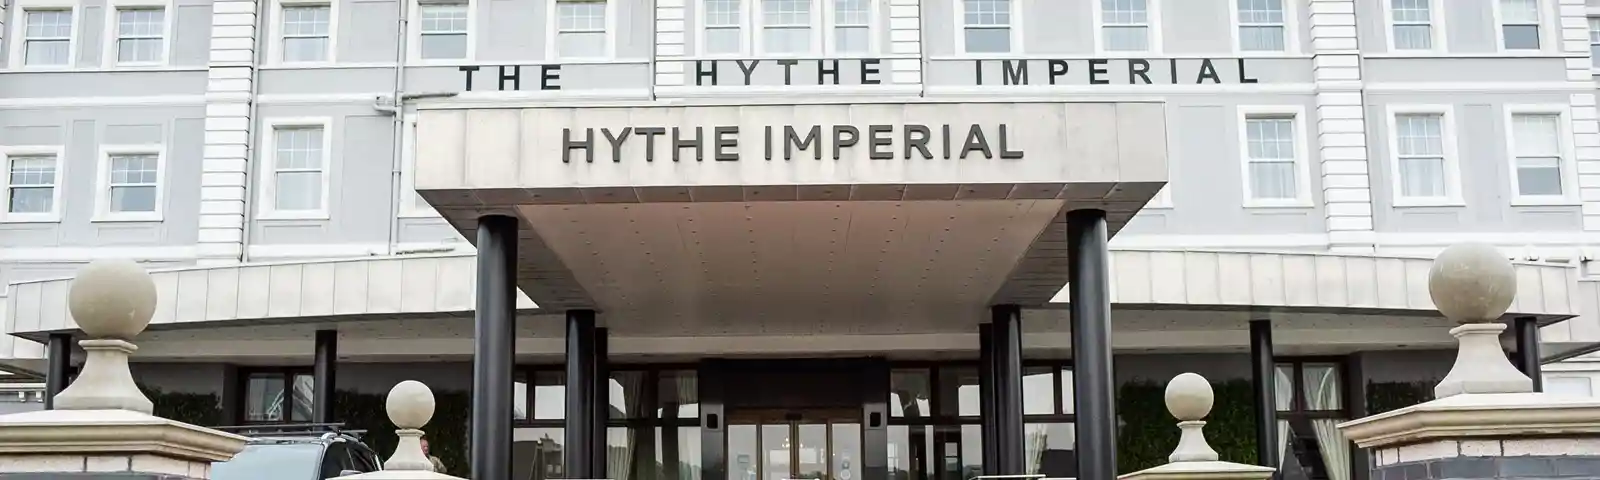 Hythe Imperial.jpg